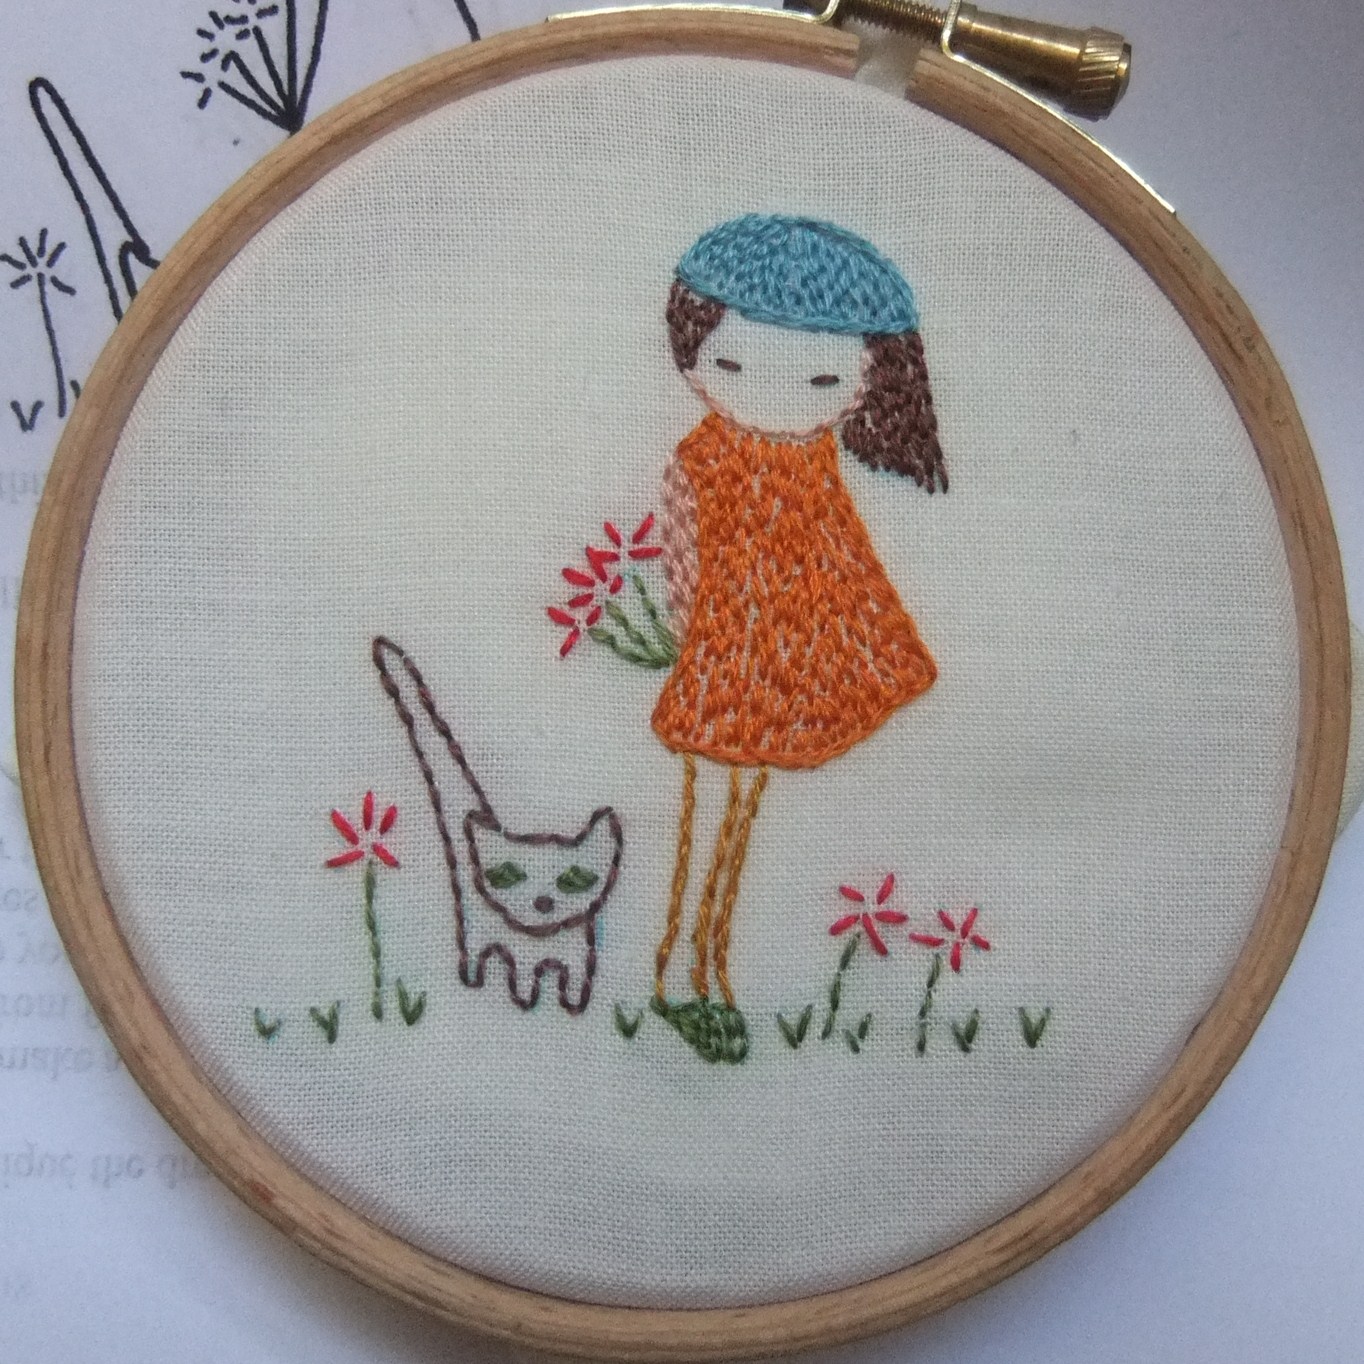 Embroidery stitch - Wikipedia, the free encyclopedia